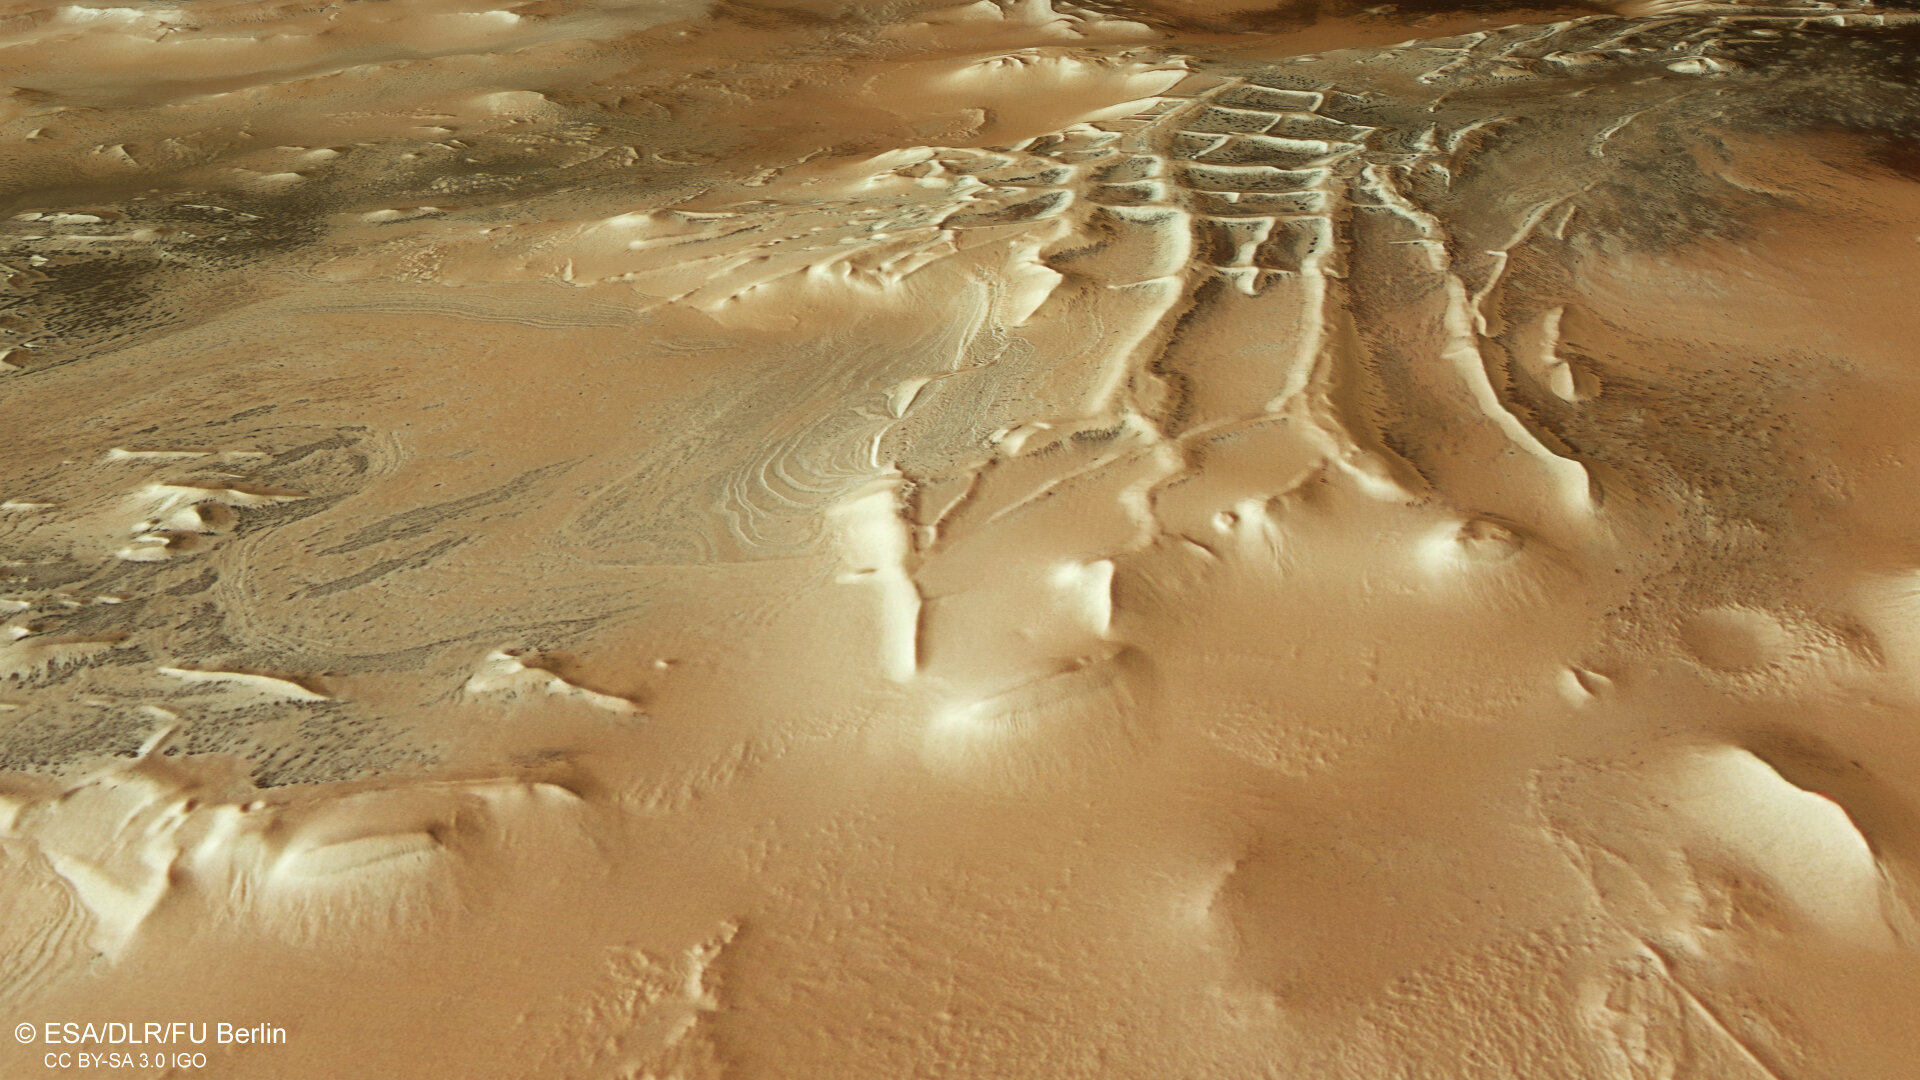 Spiders on Mars: Satellites photographed the “inhabitants” of Inca City